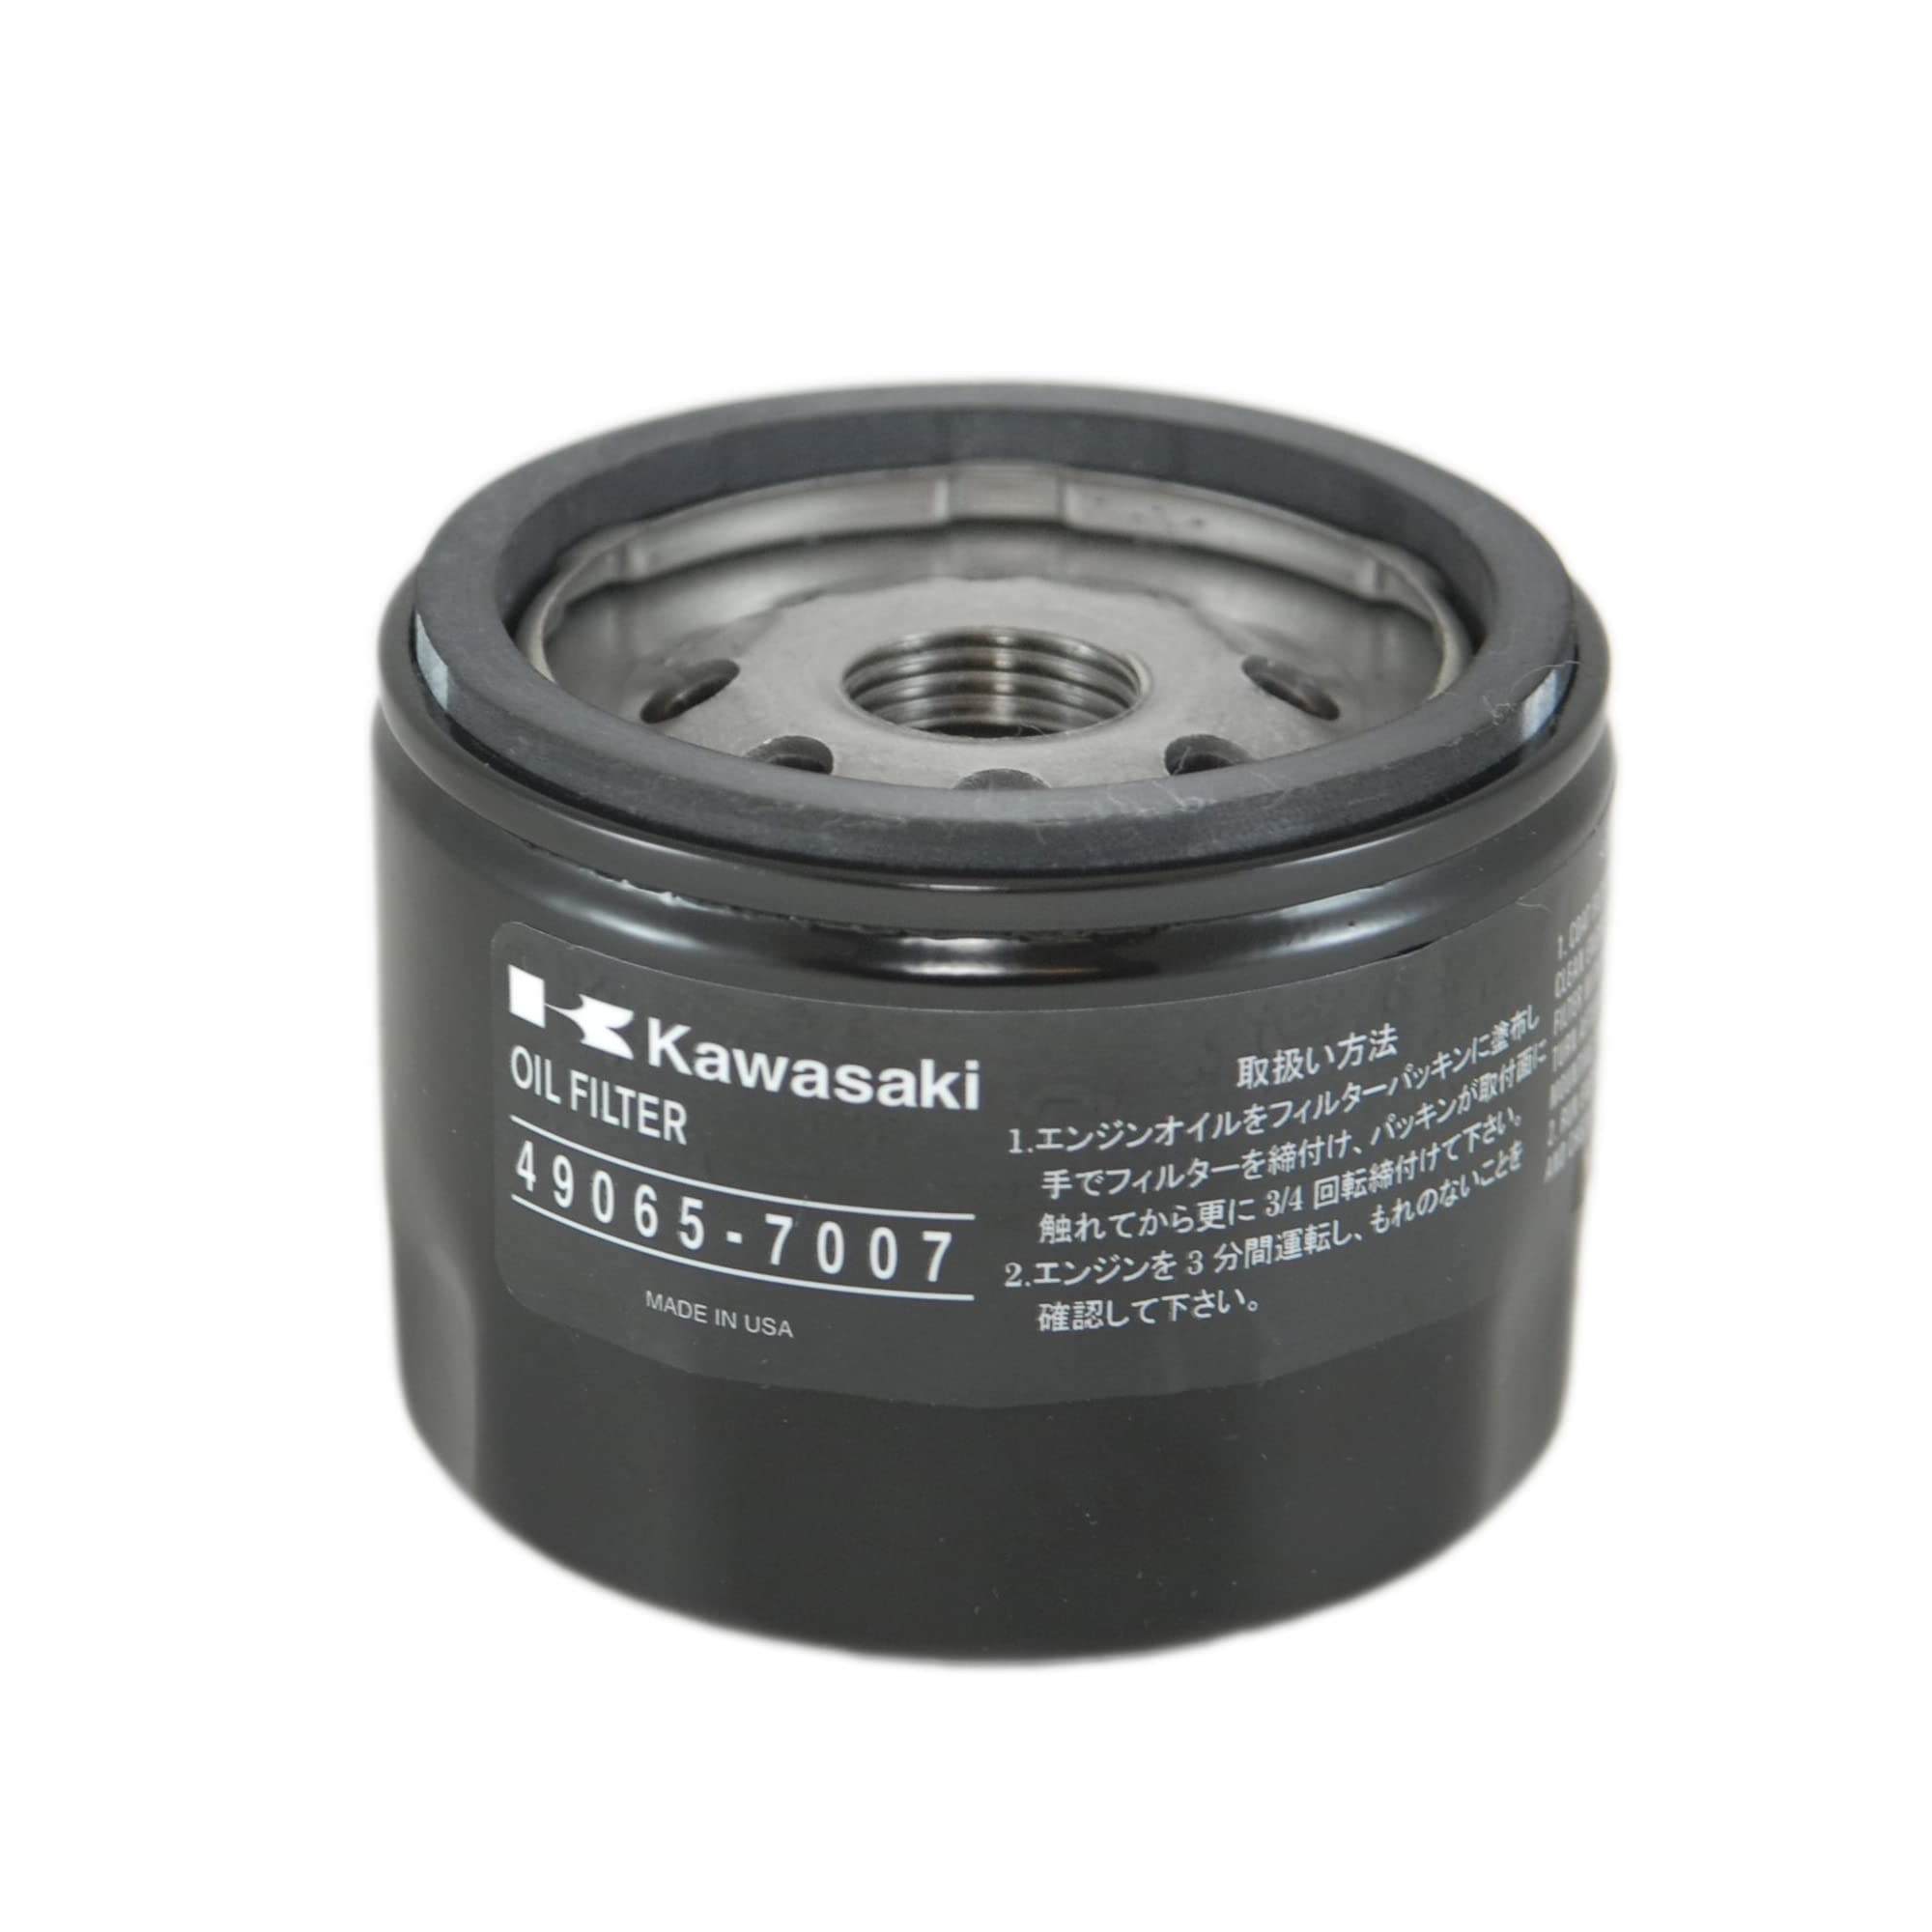 High-Quality Kawasaki 49065-7007 Oil Filters for Kawasaki, Toro, and Ariens  - 4 Packs